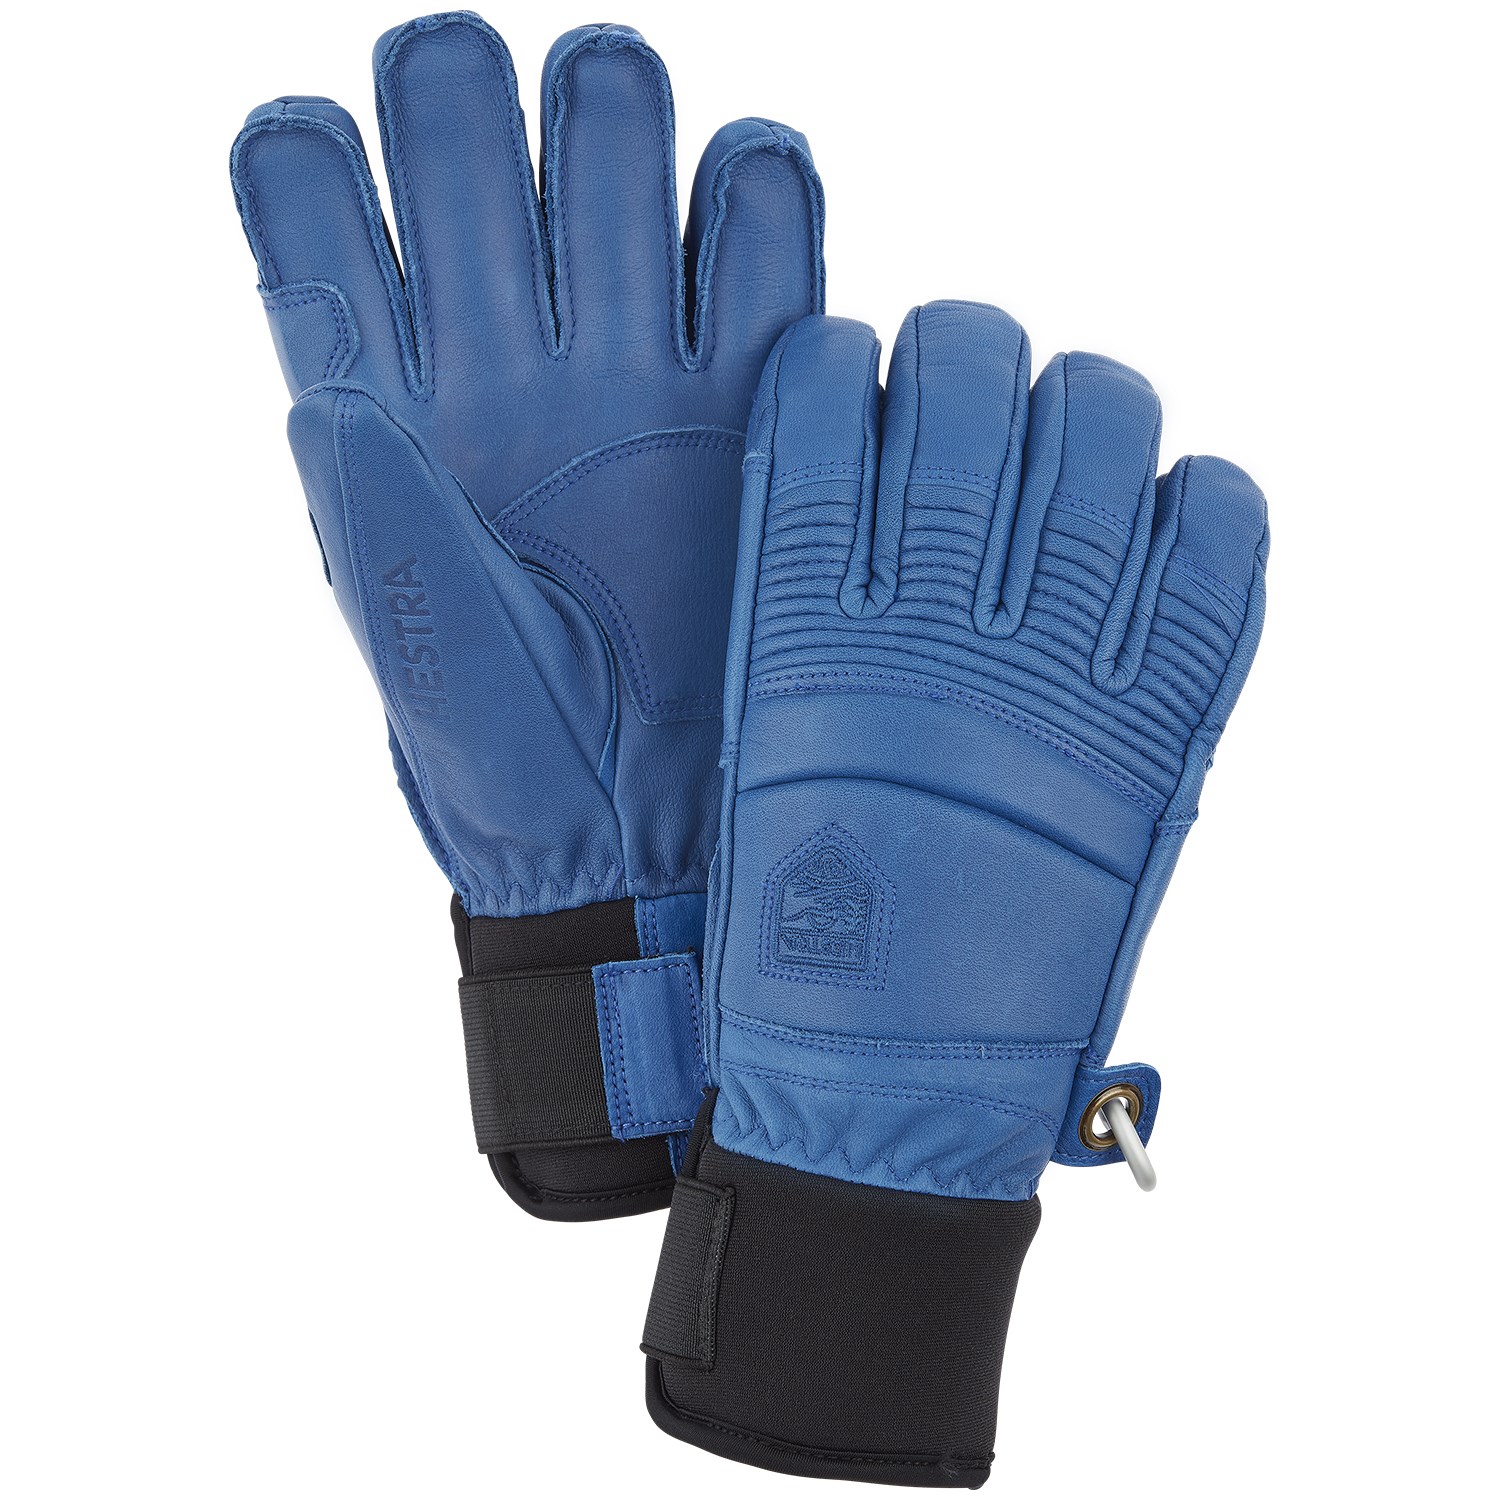 Hestra Gloves Size Chart